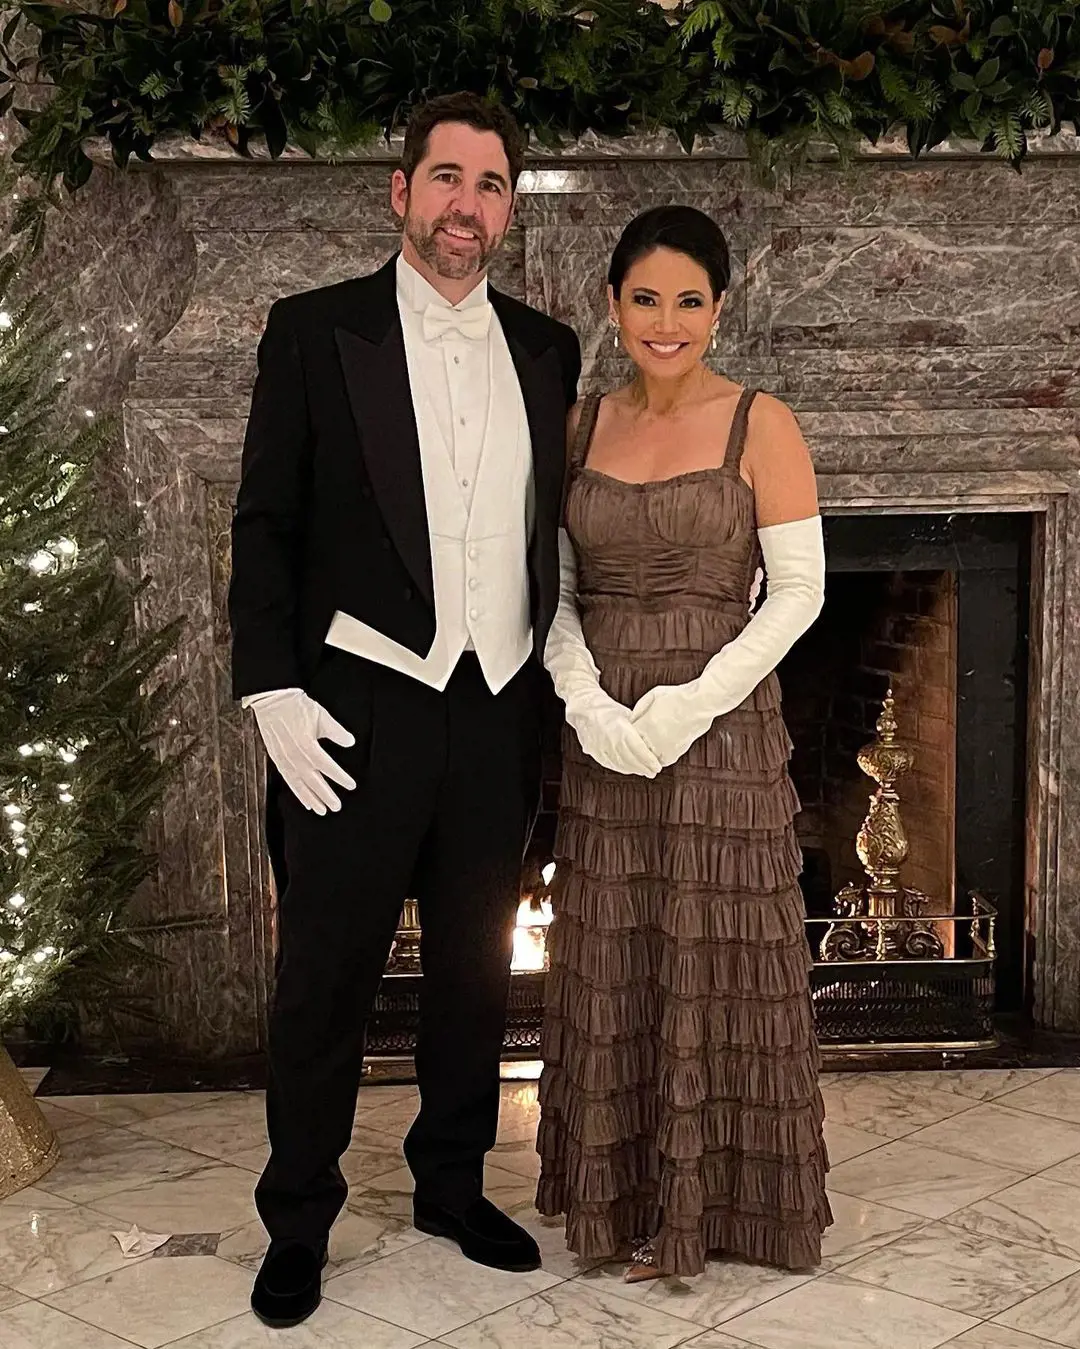 The couple took the photo at Flamenco 2022 